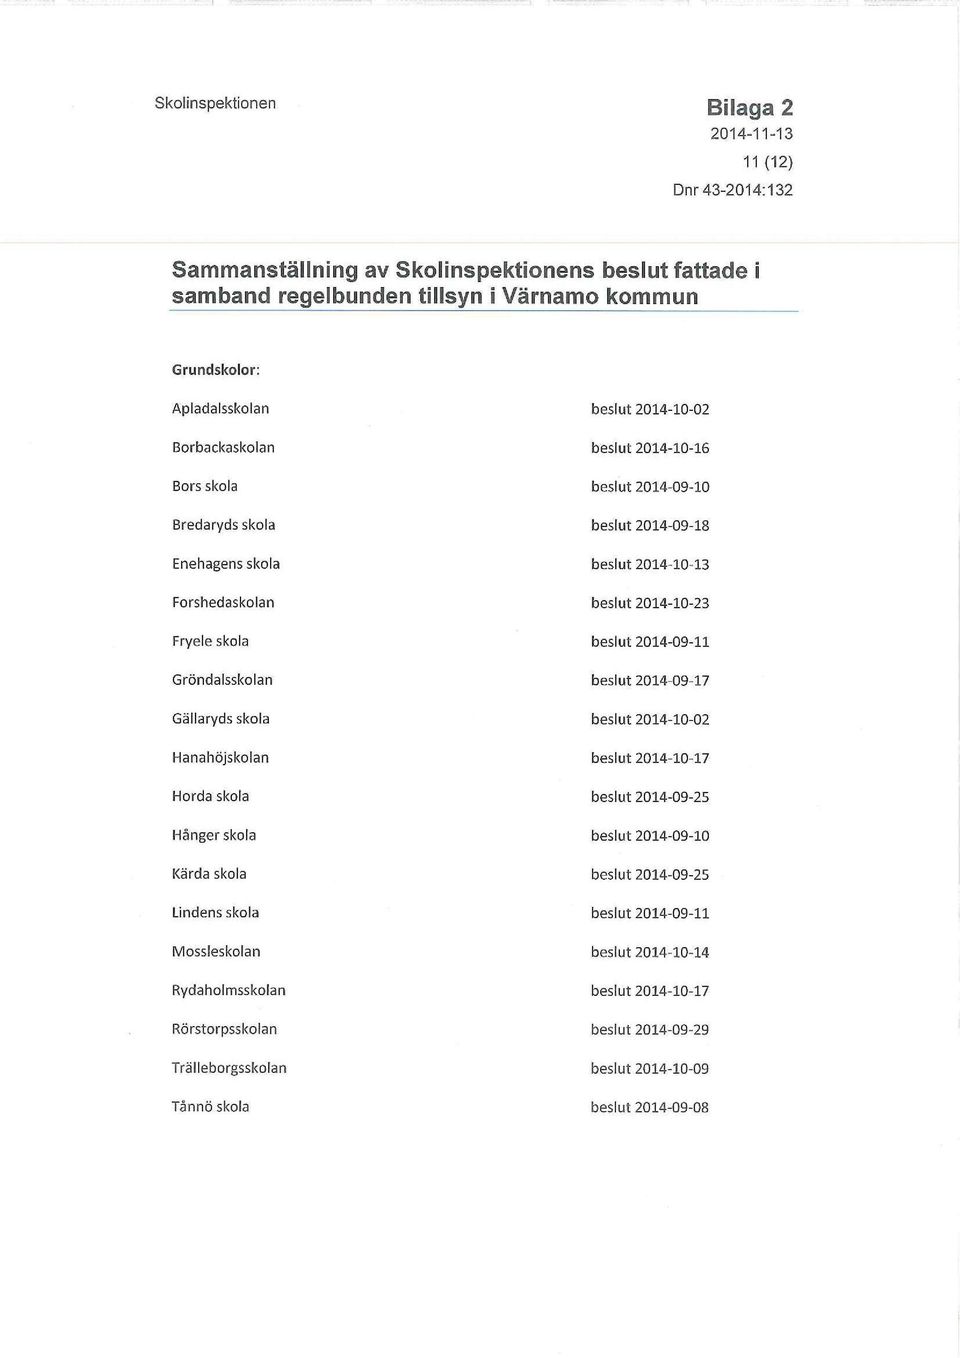 Trälleborgsskolan Tånnö skola beslut 2014-10-02 beslut 2014-10-16 beslut 2014-09-10 beslut 2014-09-18 beslut 2014-10-13 beslut 2014-10-23 beslut 2014-09-11 beslut 2014-09-17 beslut